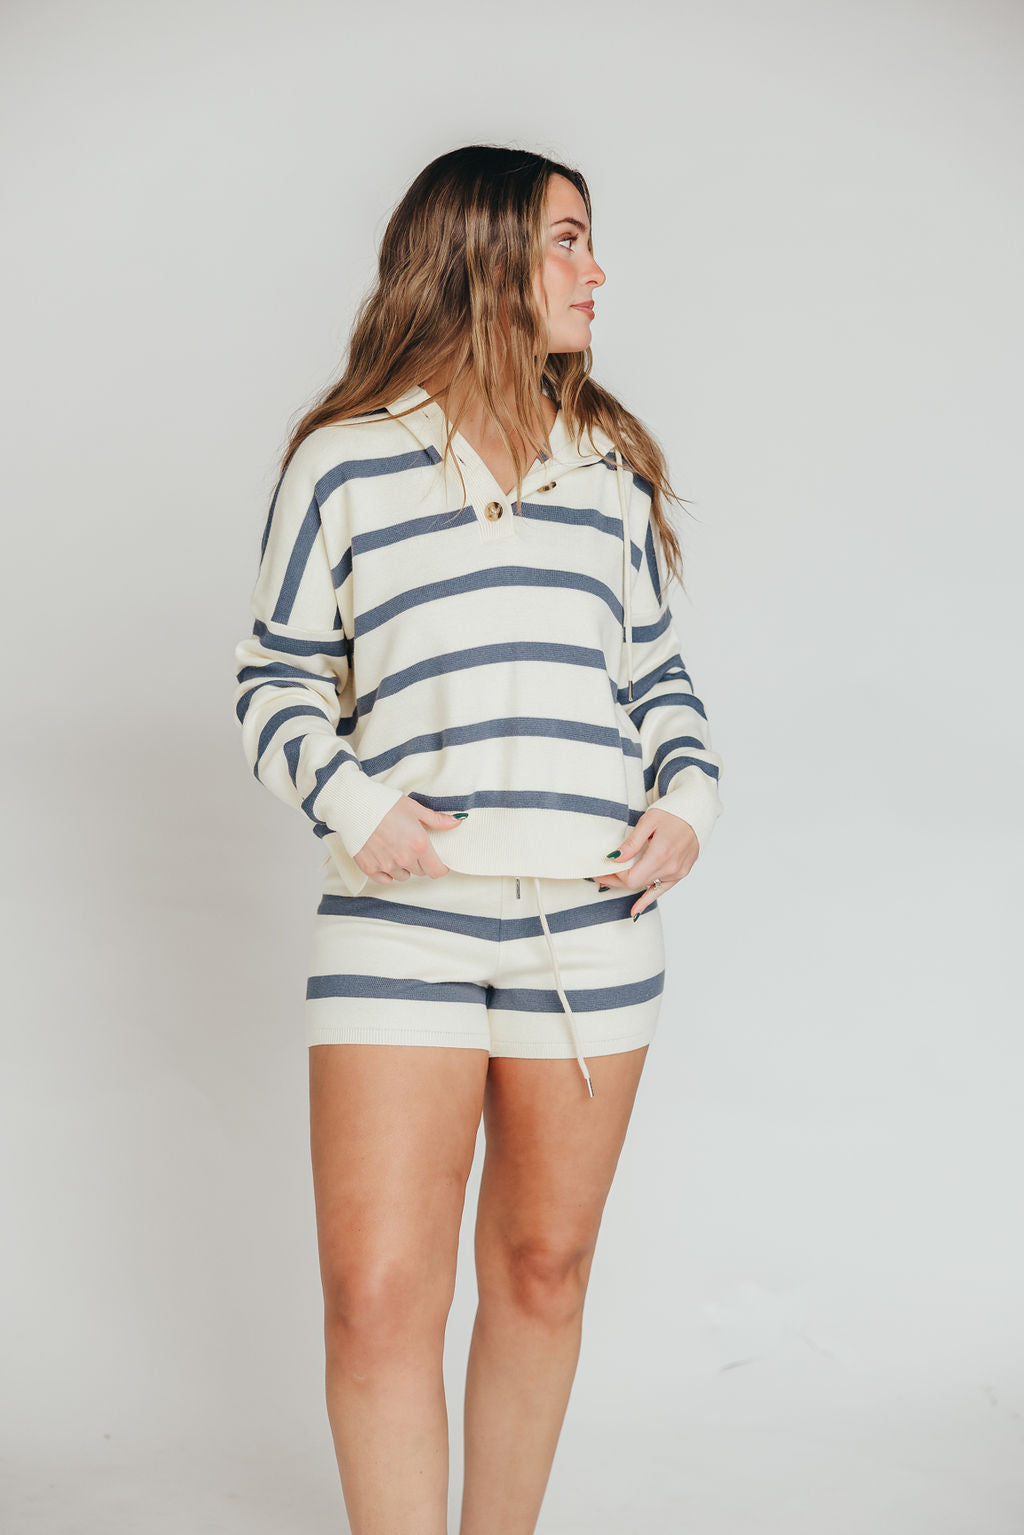 Brighton Shorts in White and Slate Blue Stripe